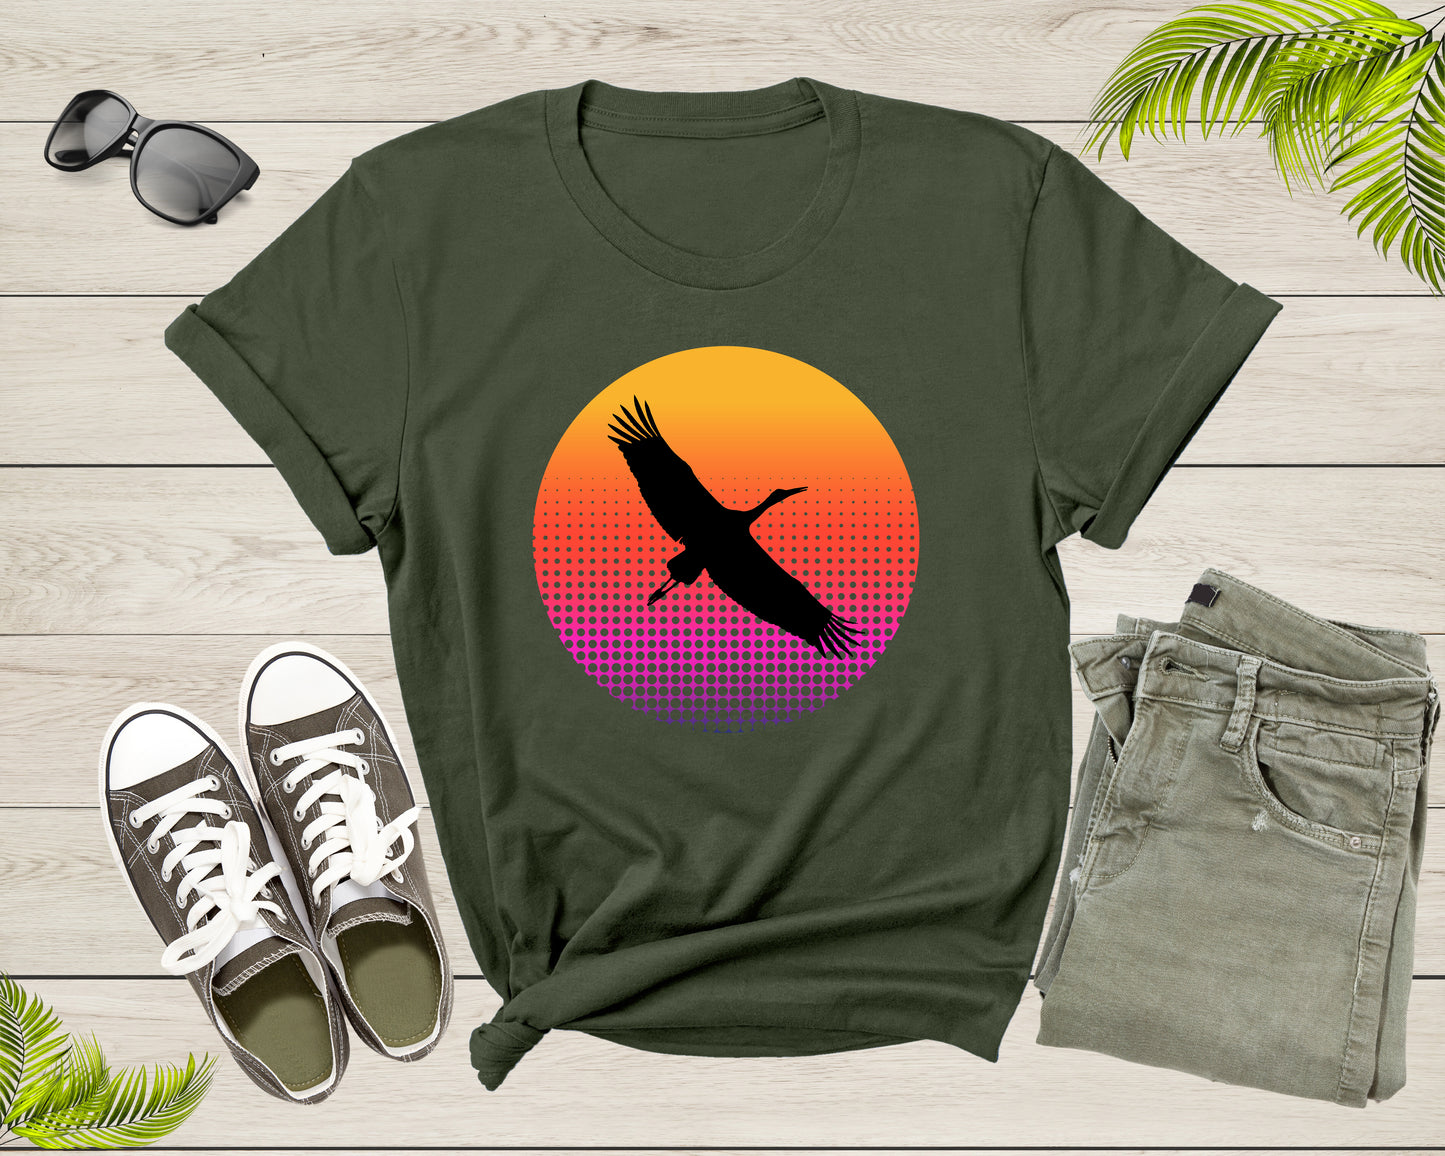 Stork Heron Bird Flying at Sunset Over Sea Beautiful Animal T-Shirt Heron Bird Lover Gift T Shirt for Men Women Kids Boys Girls Teens Tshirt